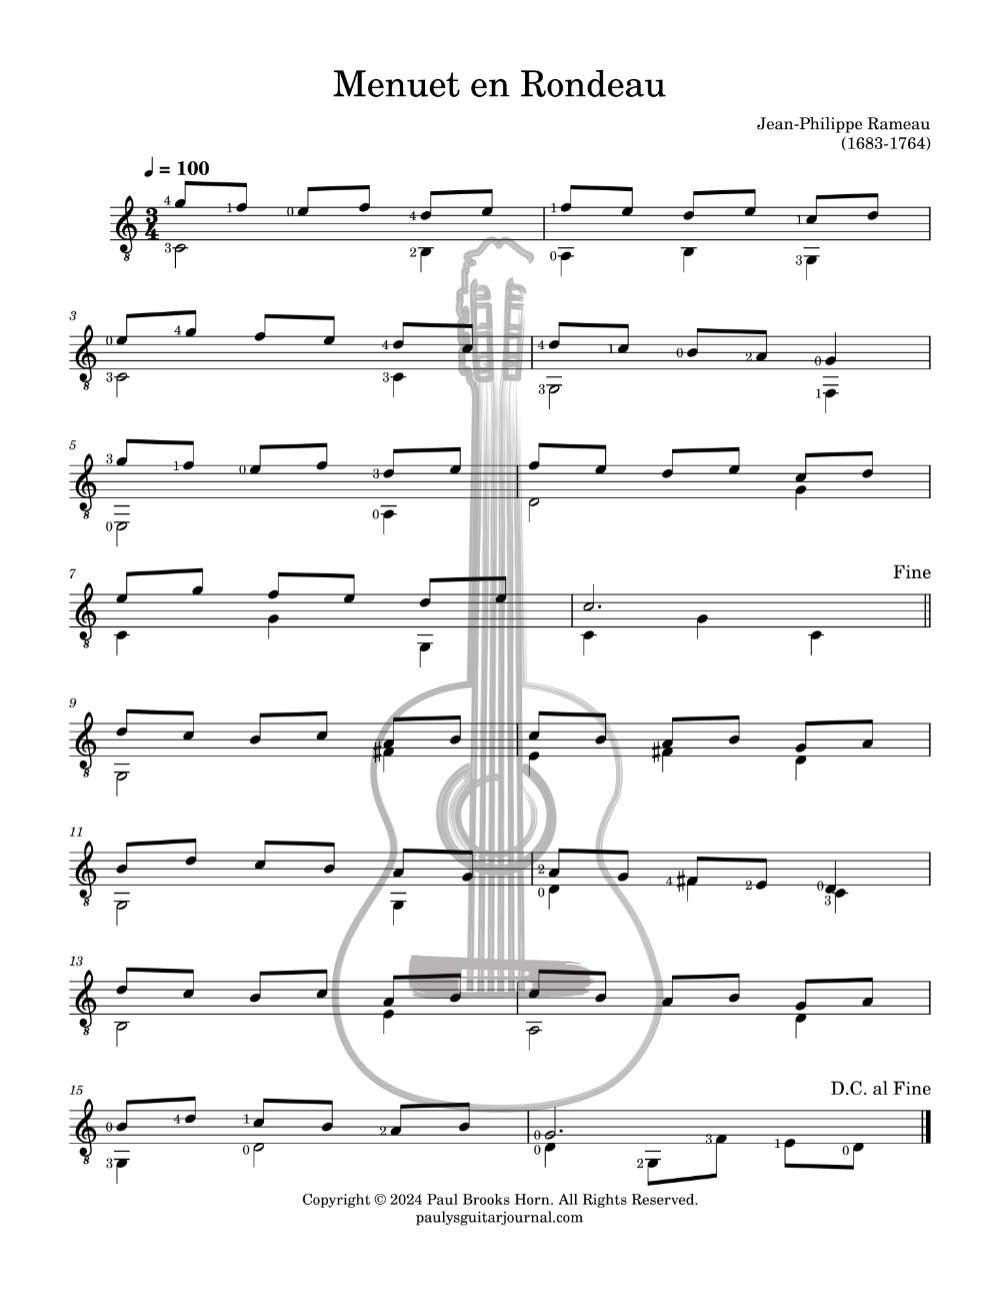 Sheet music for beginner or early intermediate classical guitar.